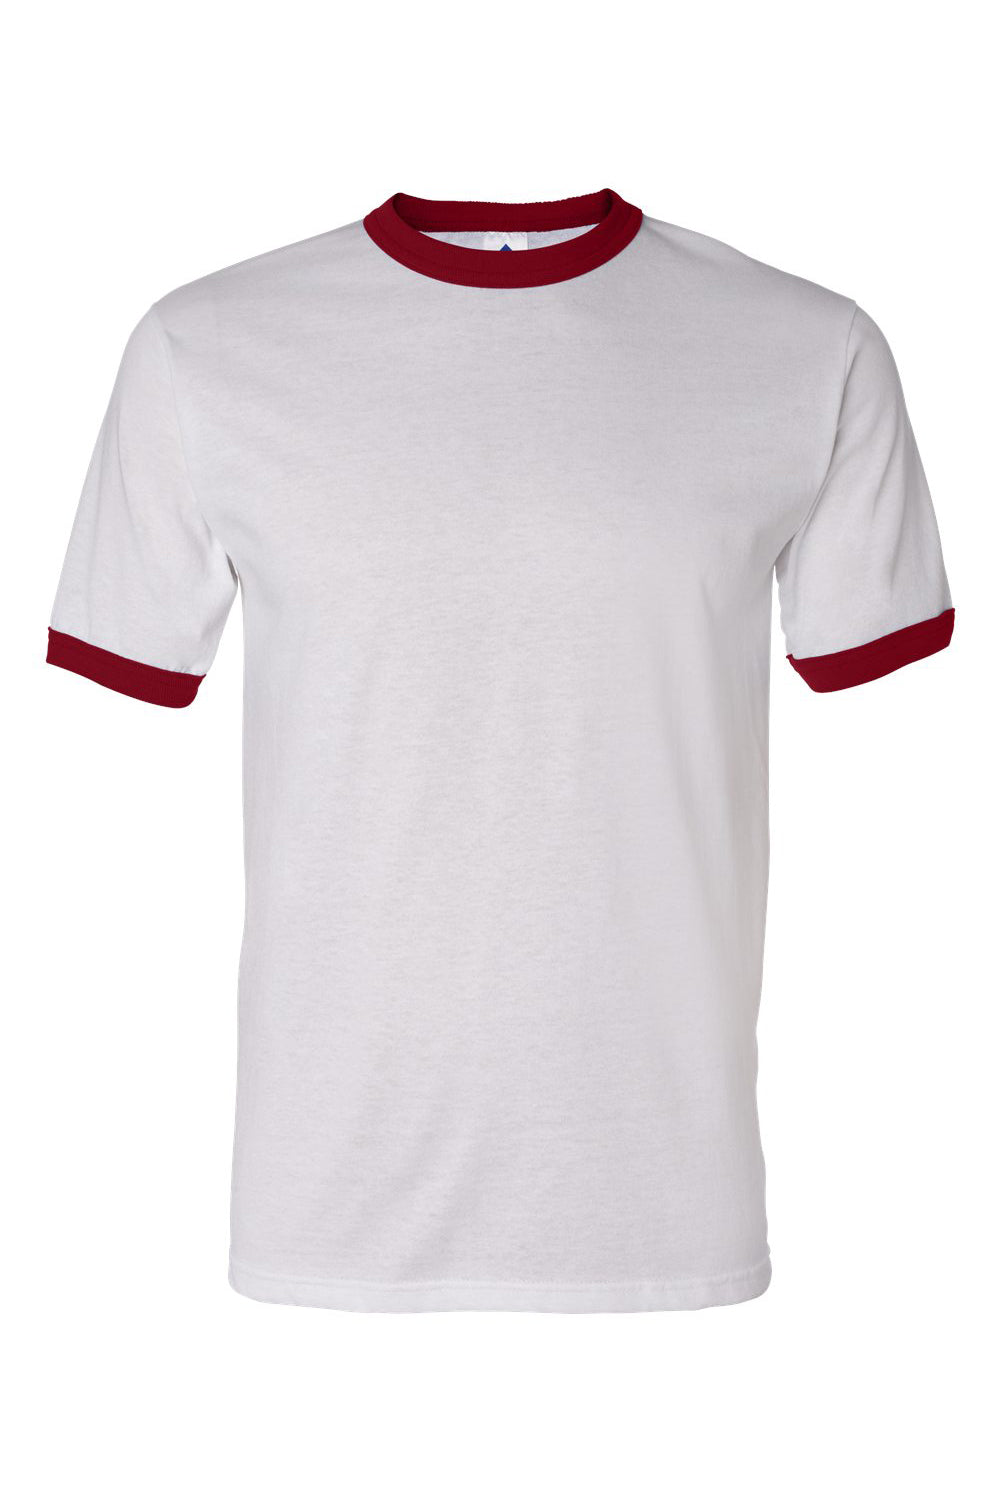 Augusta Sportswear 710 Mens Ringer Short Sleeve Crewneck T-Shirt White/Red Flat Front